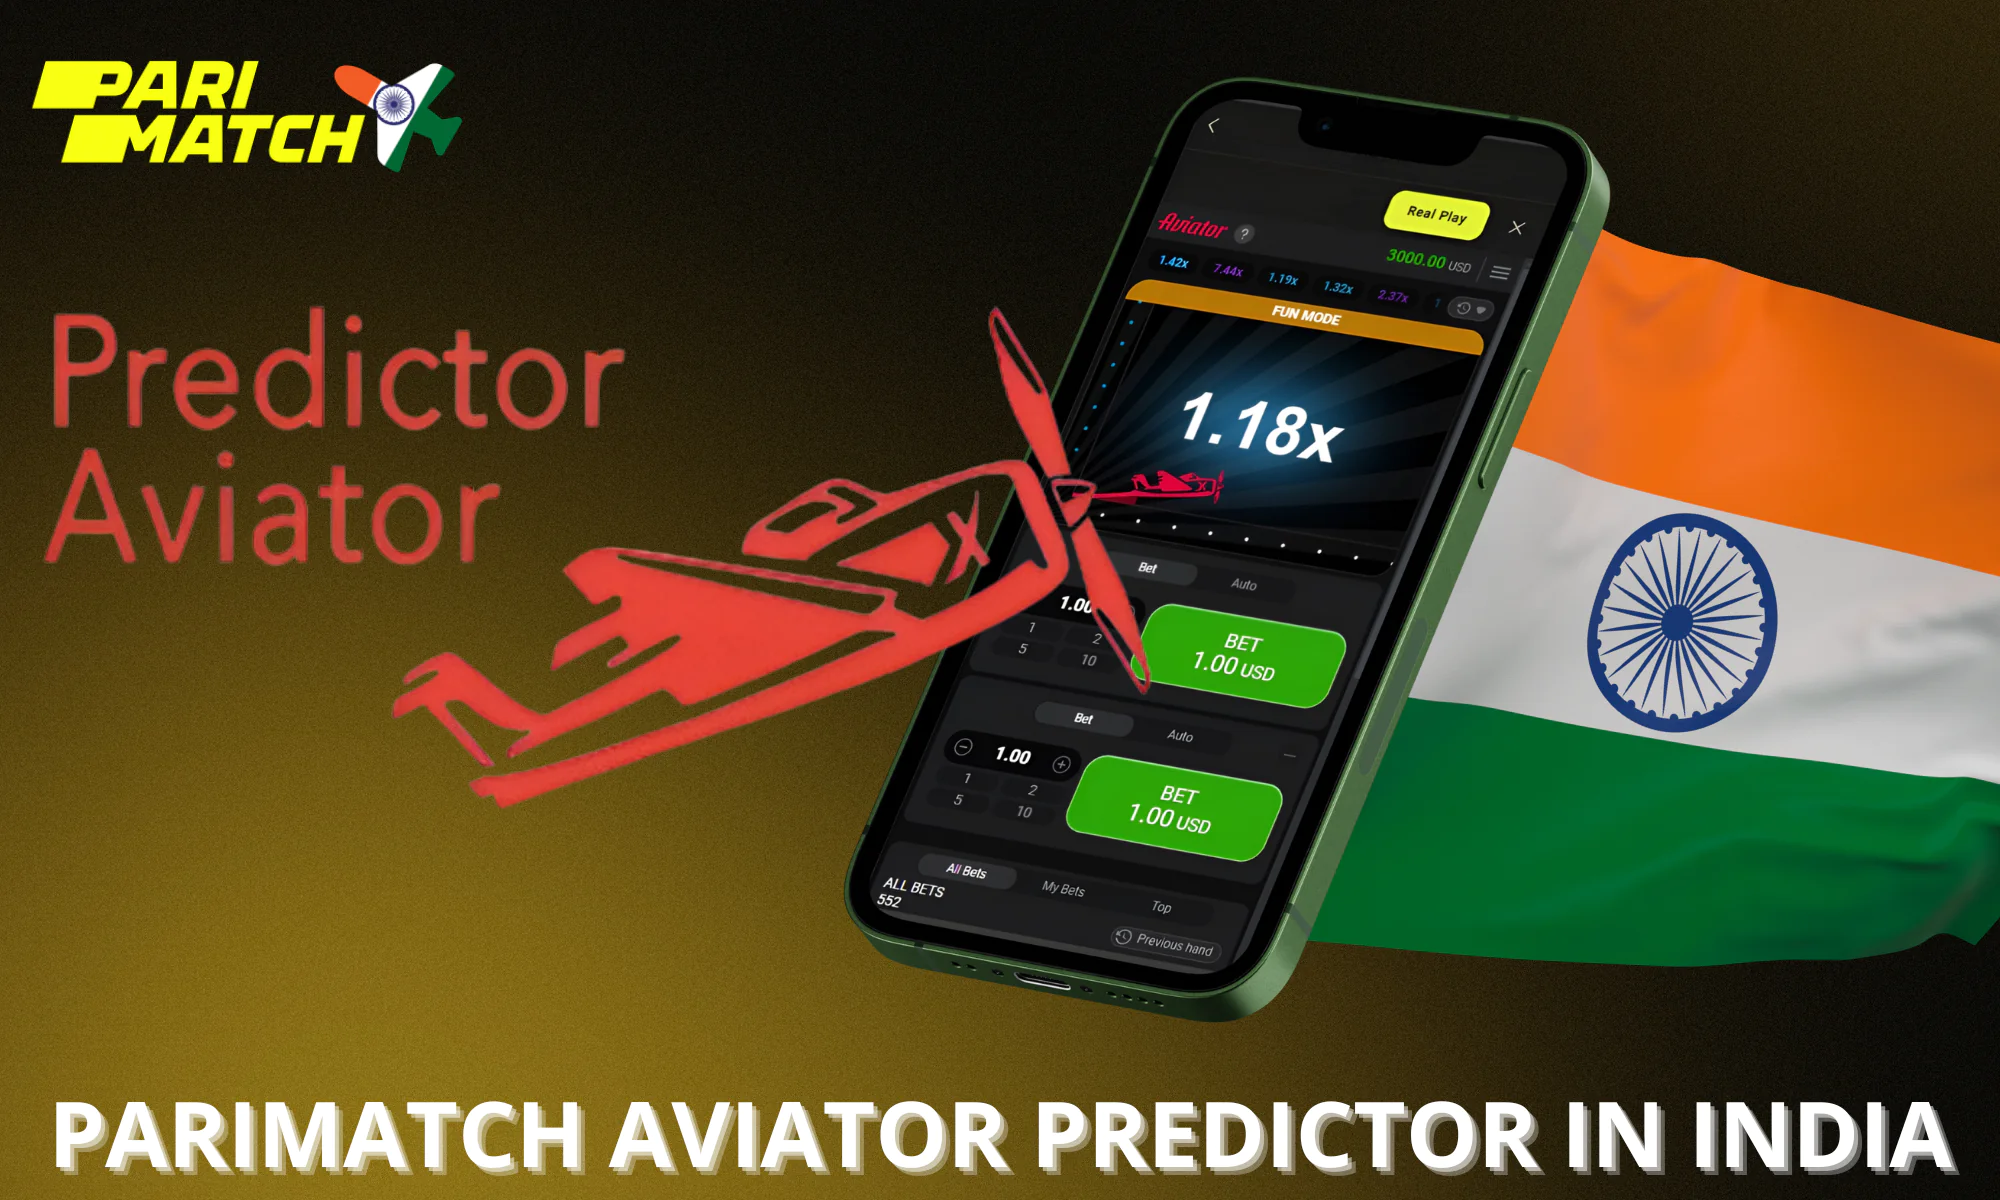 Parimatch Aviator can predict the next bet using the program